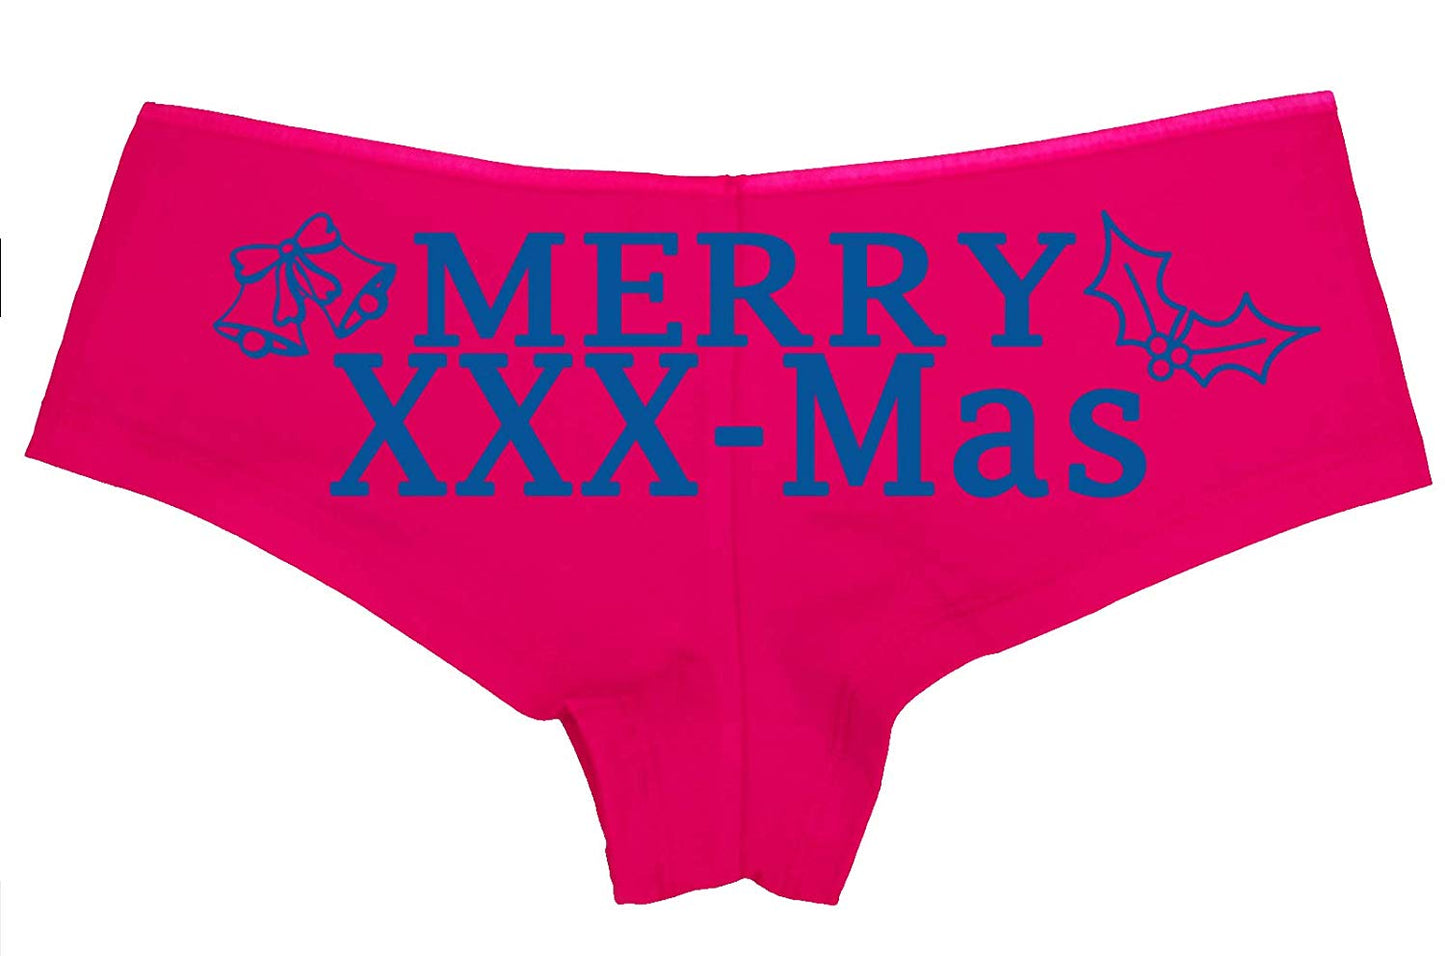 Knaughty Knickers Christmas Merry XXX-Mas Panties X-Rated Porn Star Pink Panties